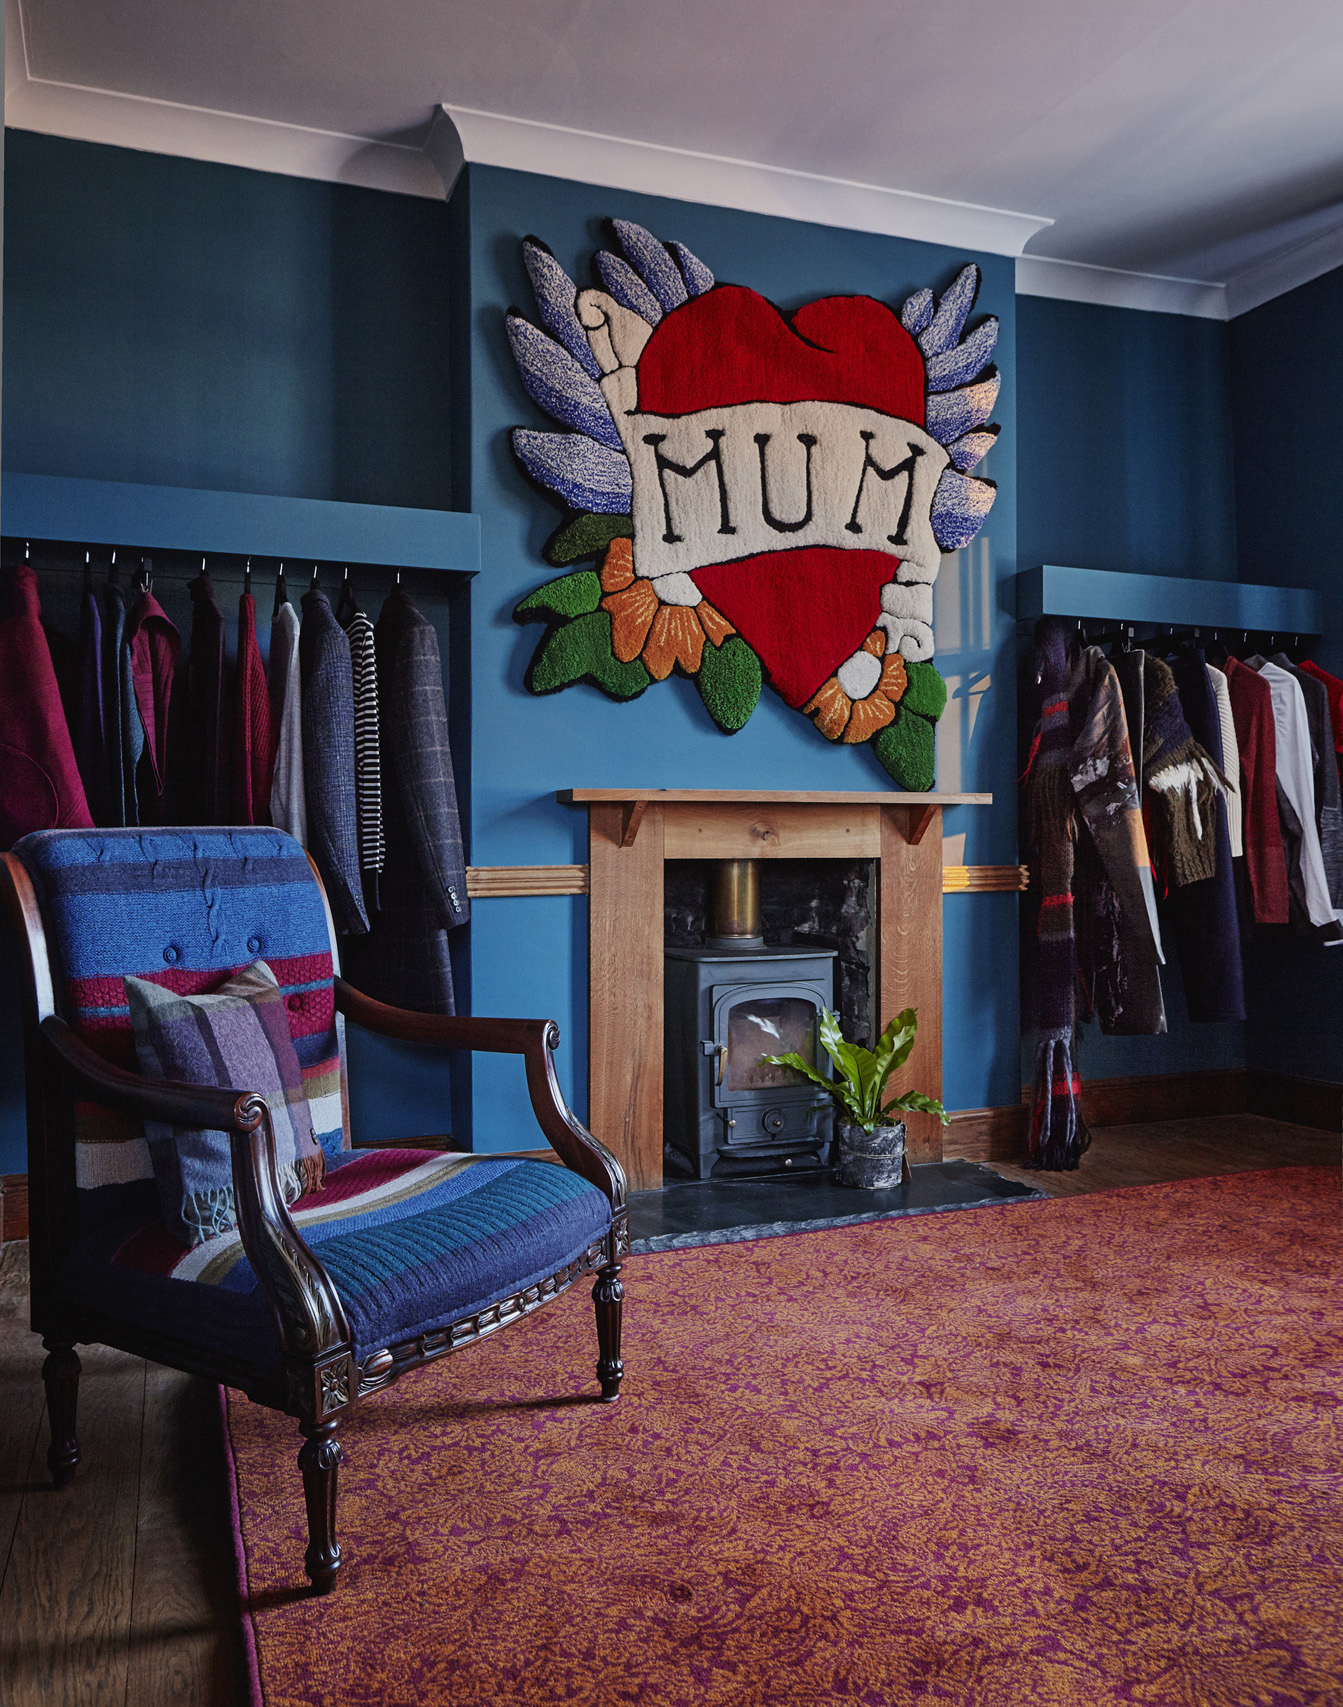 The Campaign for Wool, Wool BnB, London Photo: Peter Dixon Design and Curation: Karina Garrick @karinagarrick